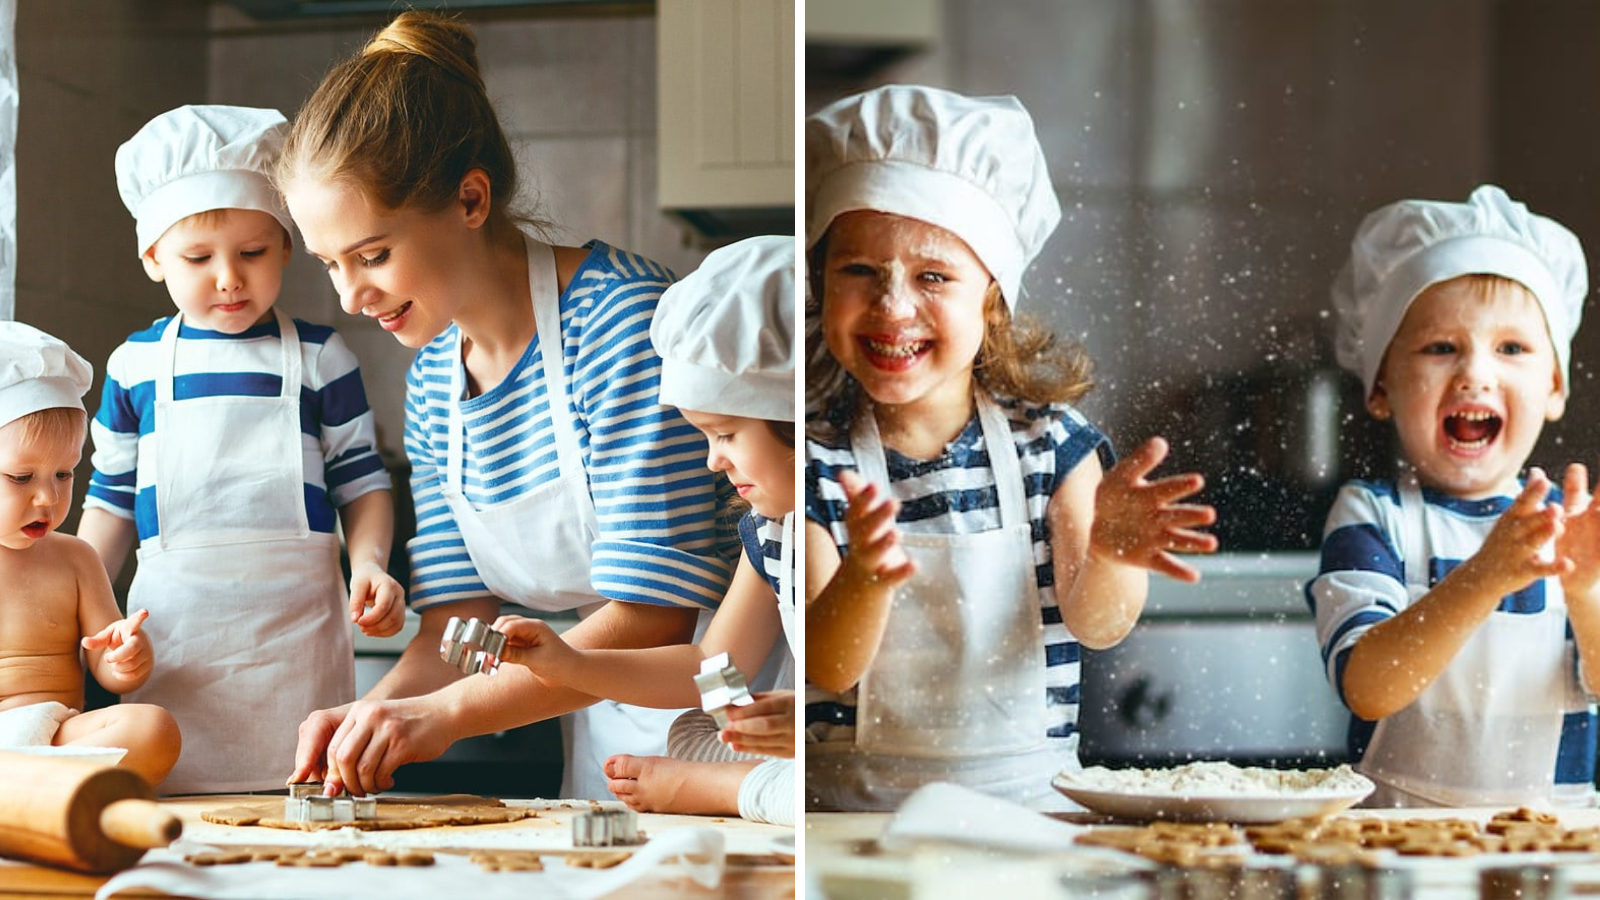 Kids imitate their parents to prepare food.